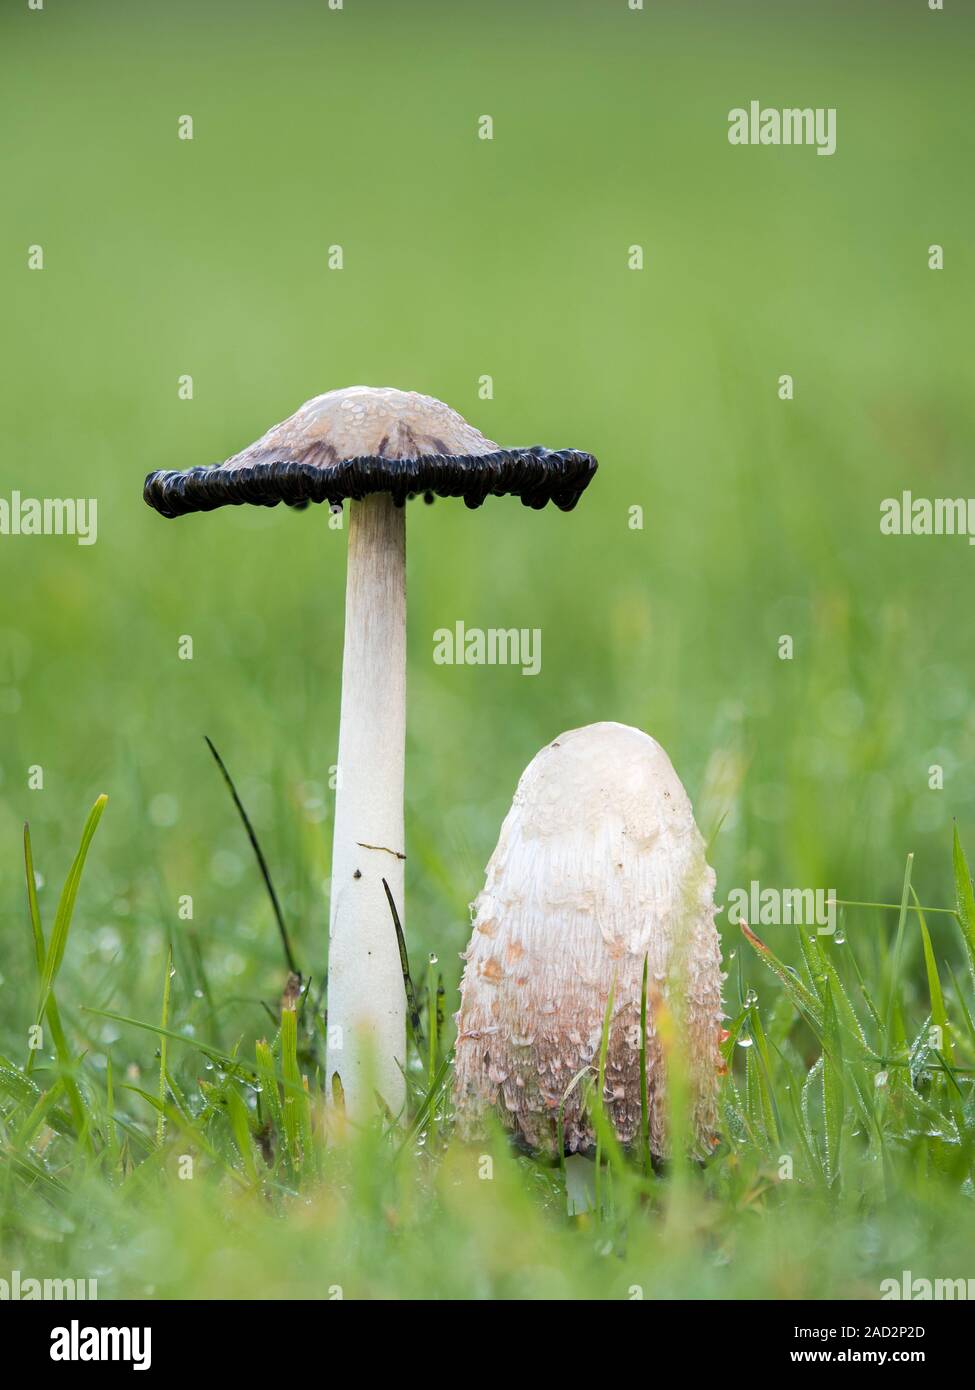 Pair of Shaggy Inkcap mushrooms (Coprinus comatus) growing on a lawn. Tipperary, Ireland Stock Photo